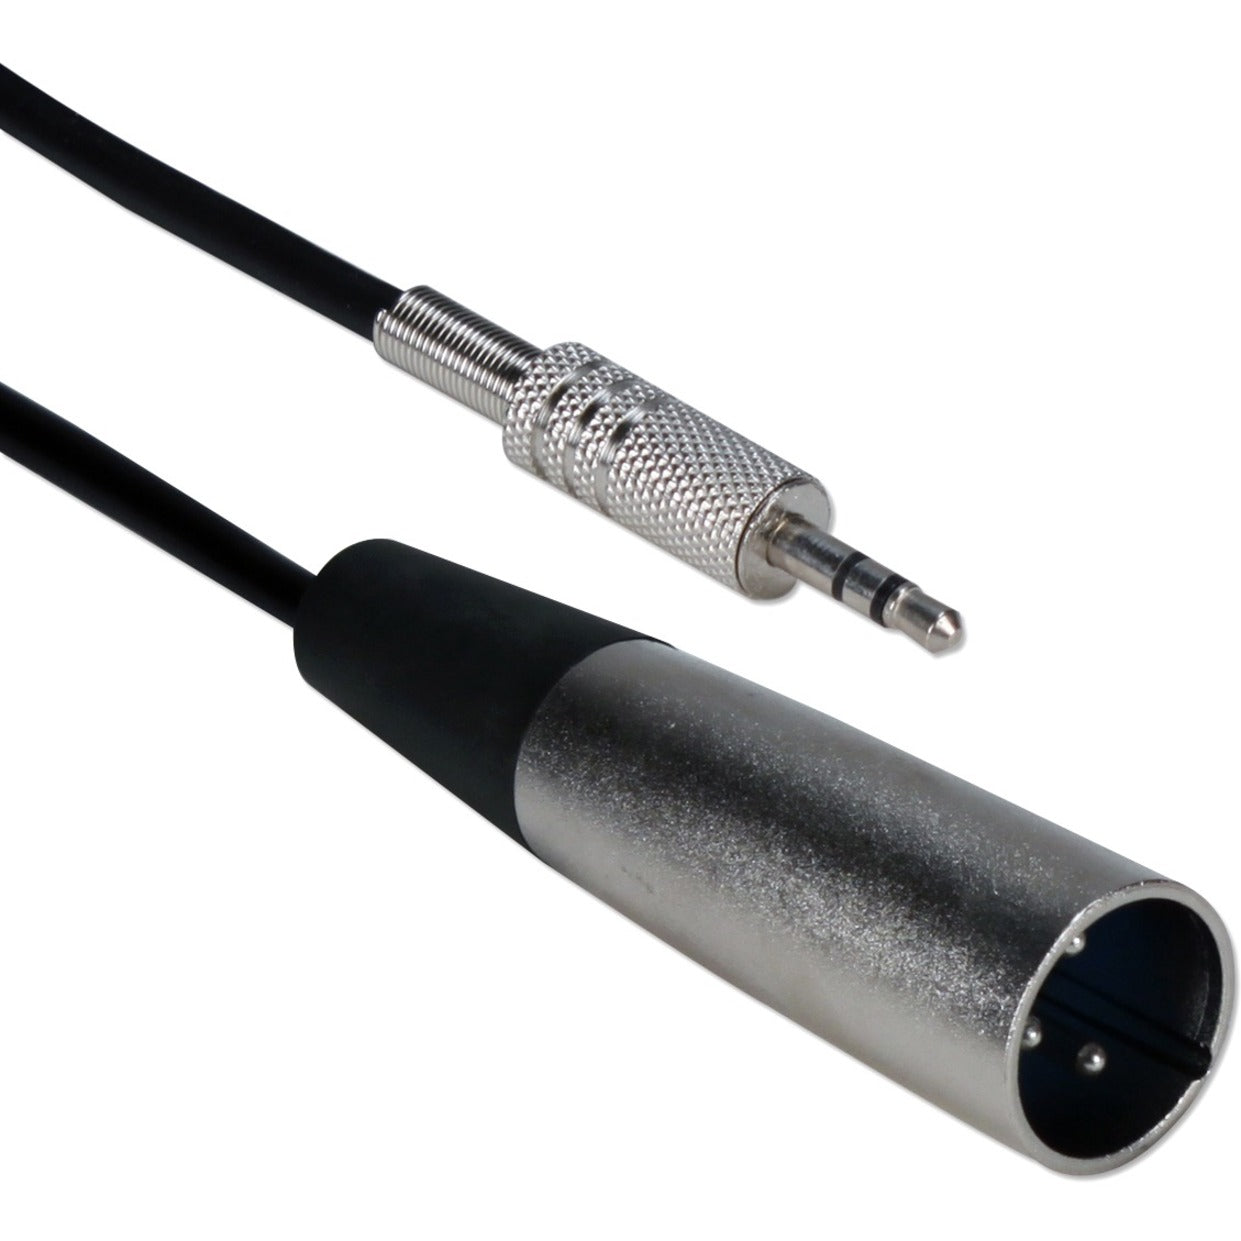 QVS XLRSM-06 6ft XLR Male to 3.5mm Male Balanced Audio Cable, Noise Reducing, Heavy Duty, Locking Latch, Strain Relief, Flexible